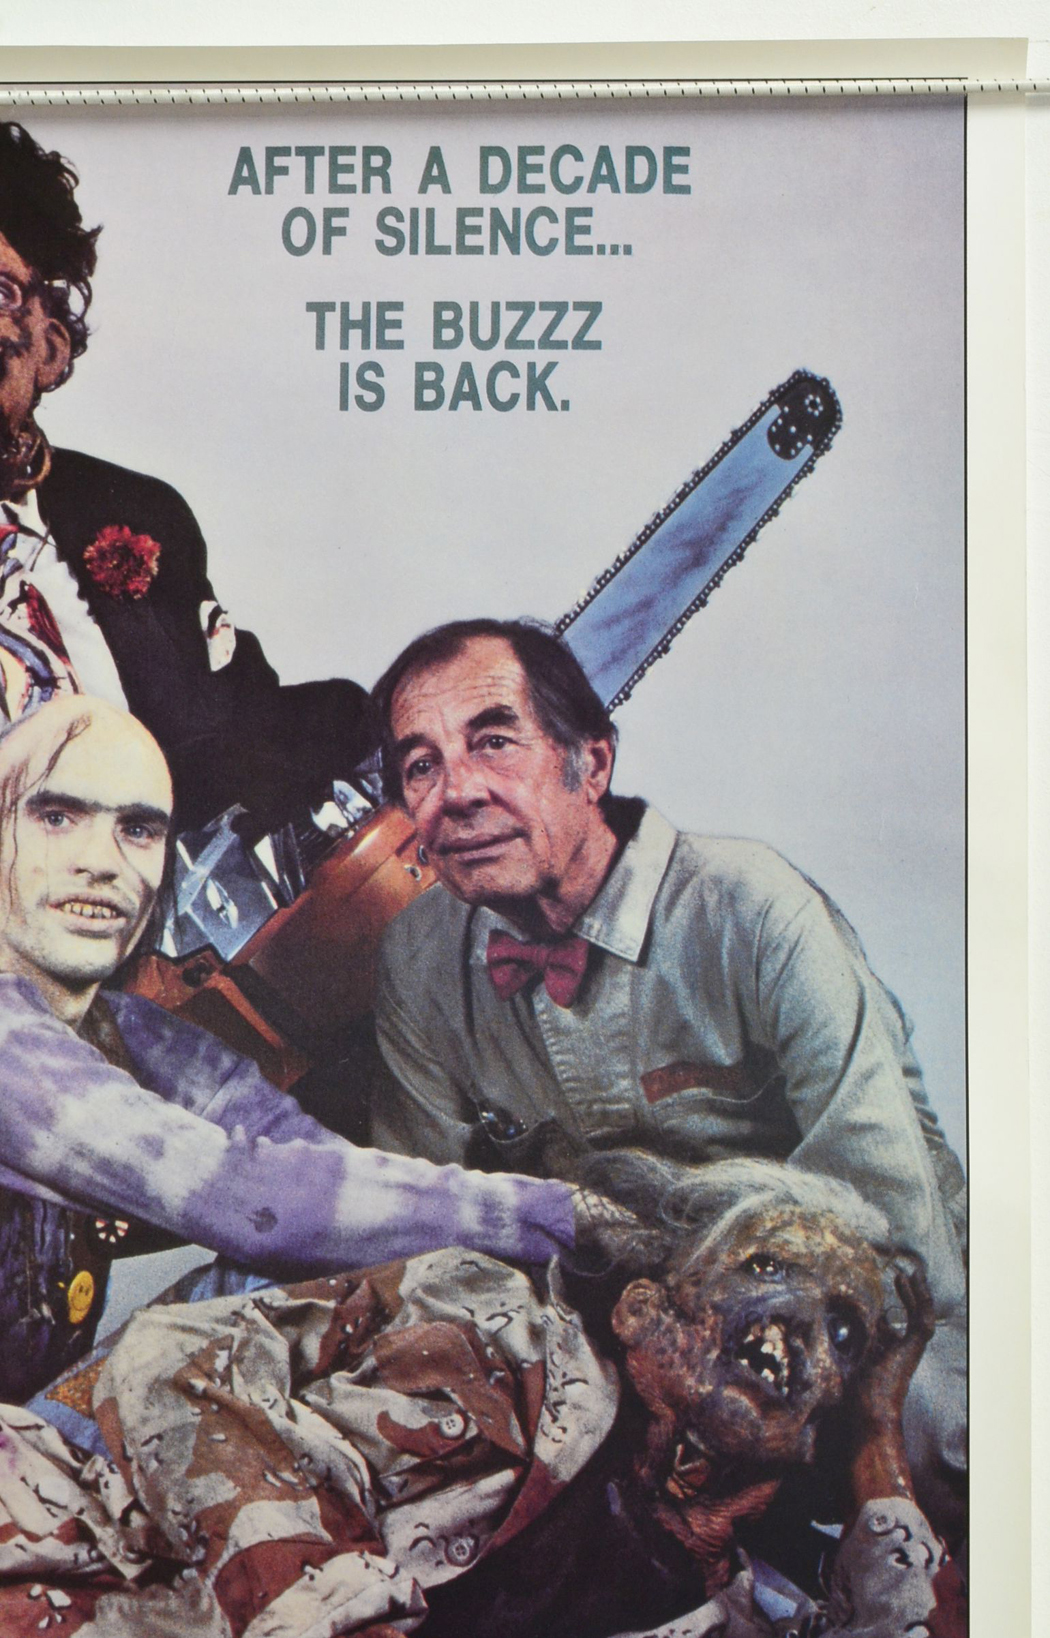 Texas Chainsaw Massacre Part 2 (The) - Original Cinema Movie Poster